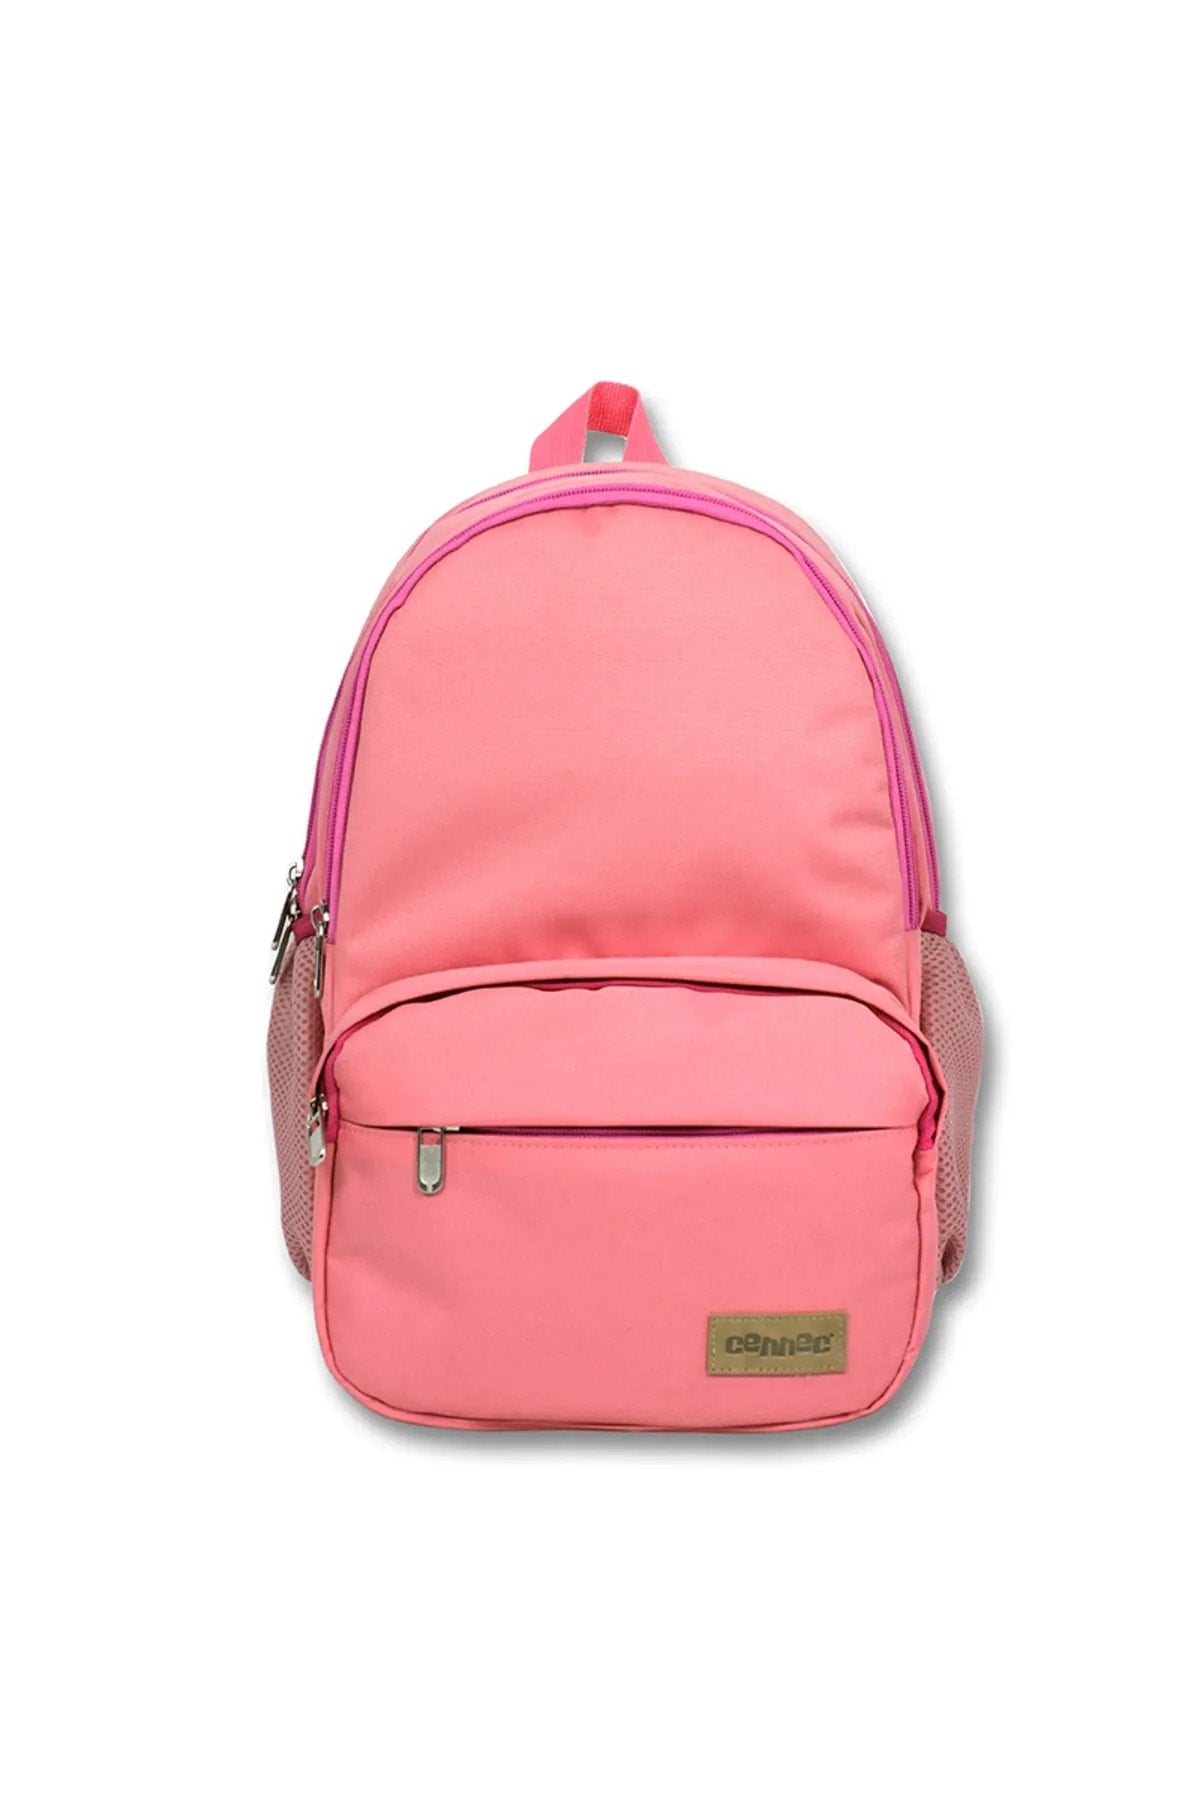 Cennec Ümit Bag Pink School Bag 2621